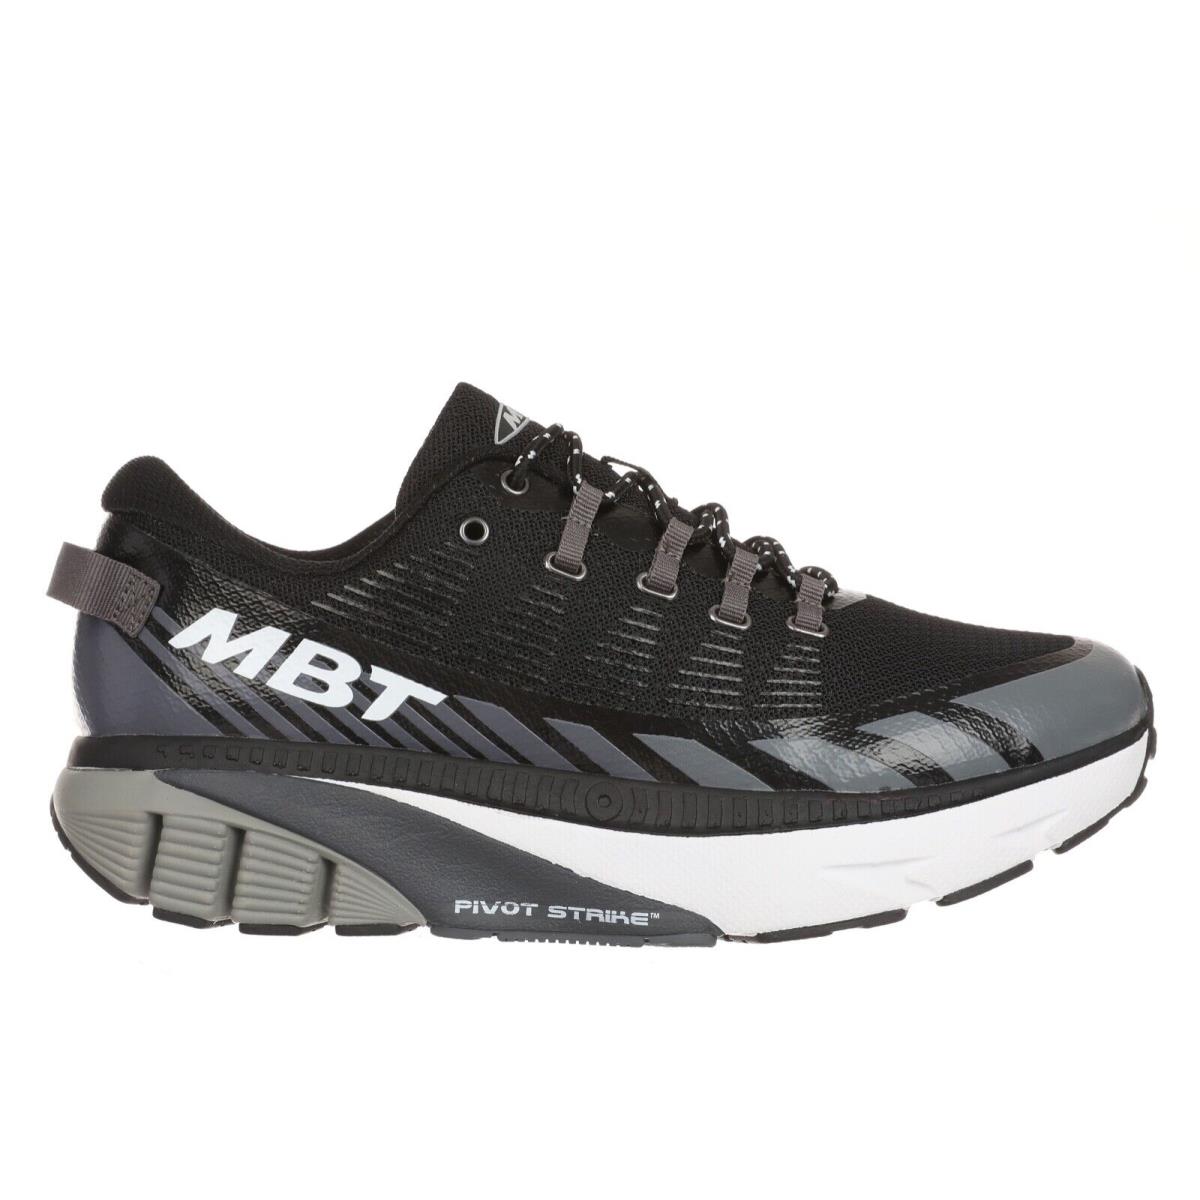 Mbt Mens MTR-1500 Trainer w/ Light Weight Level 2 Rock Mesh 8 Colors - Manufacturer: